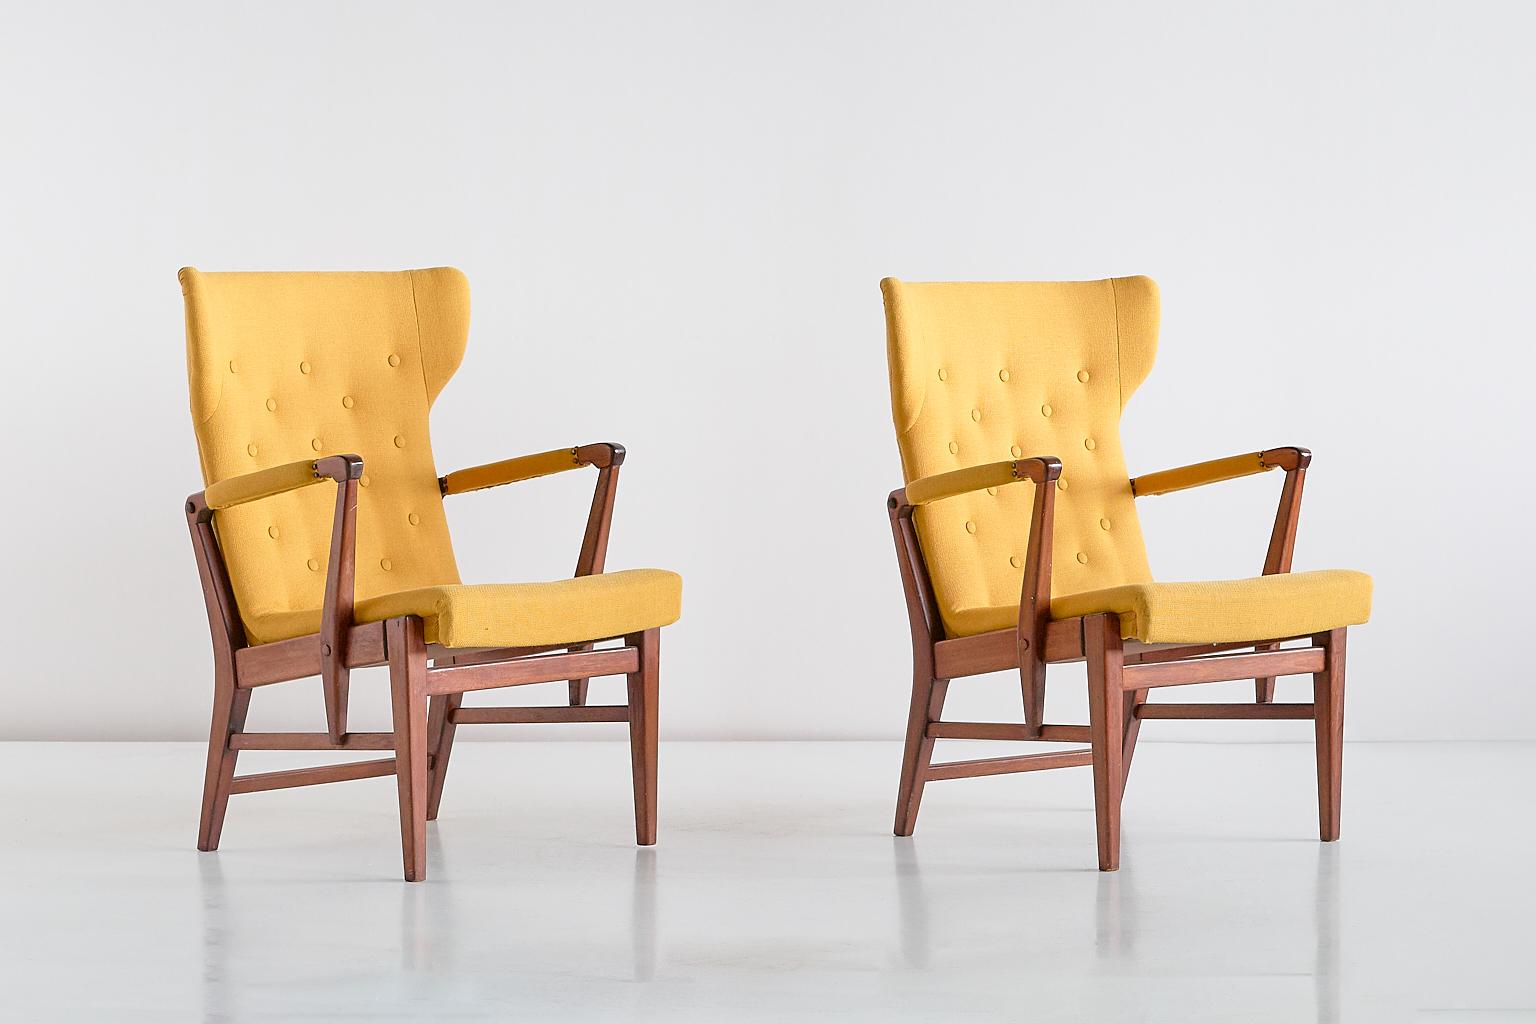 Ein Paar Bertil Söderbergs Sessel aus Mahagoni für Nordiska Kompaniet, 1940er Jahre (Skandinavische Moderne) im Angebot